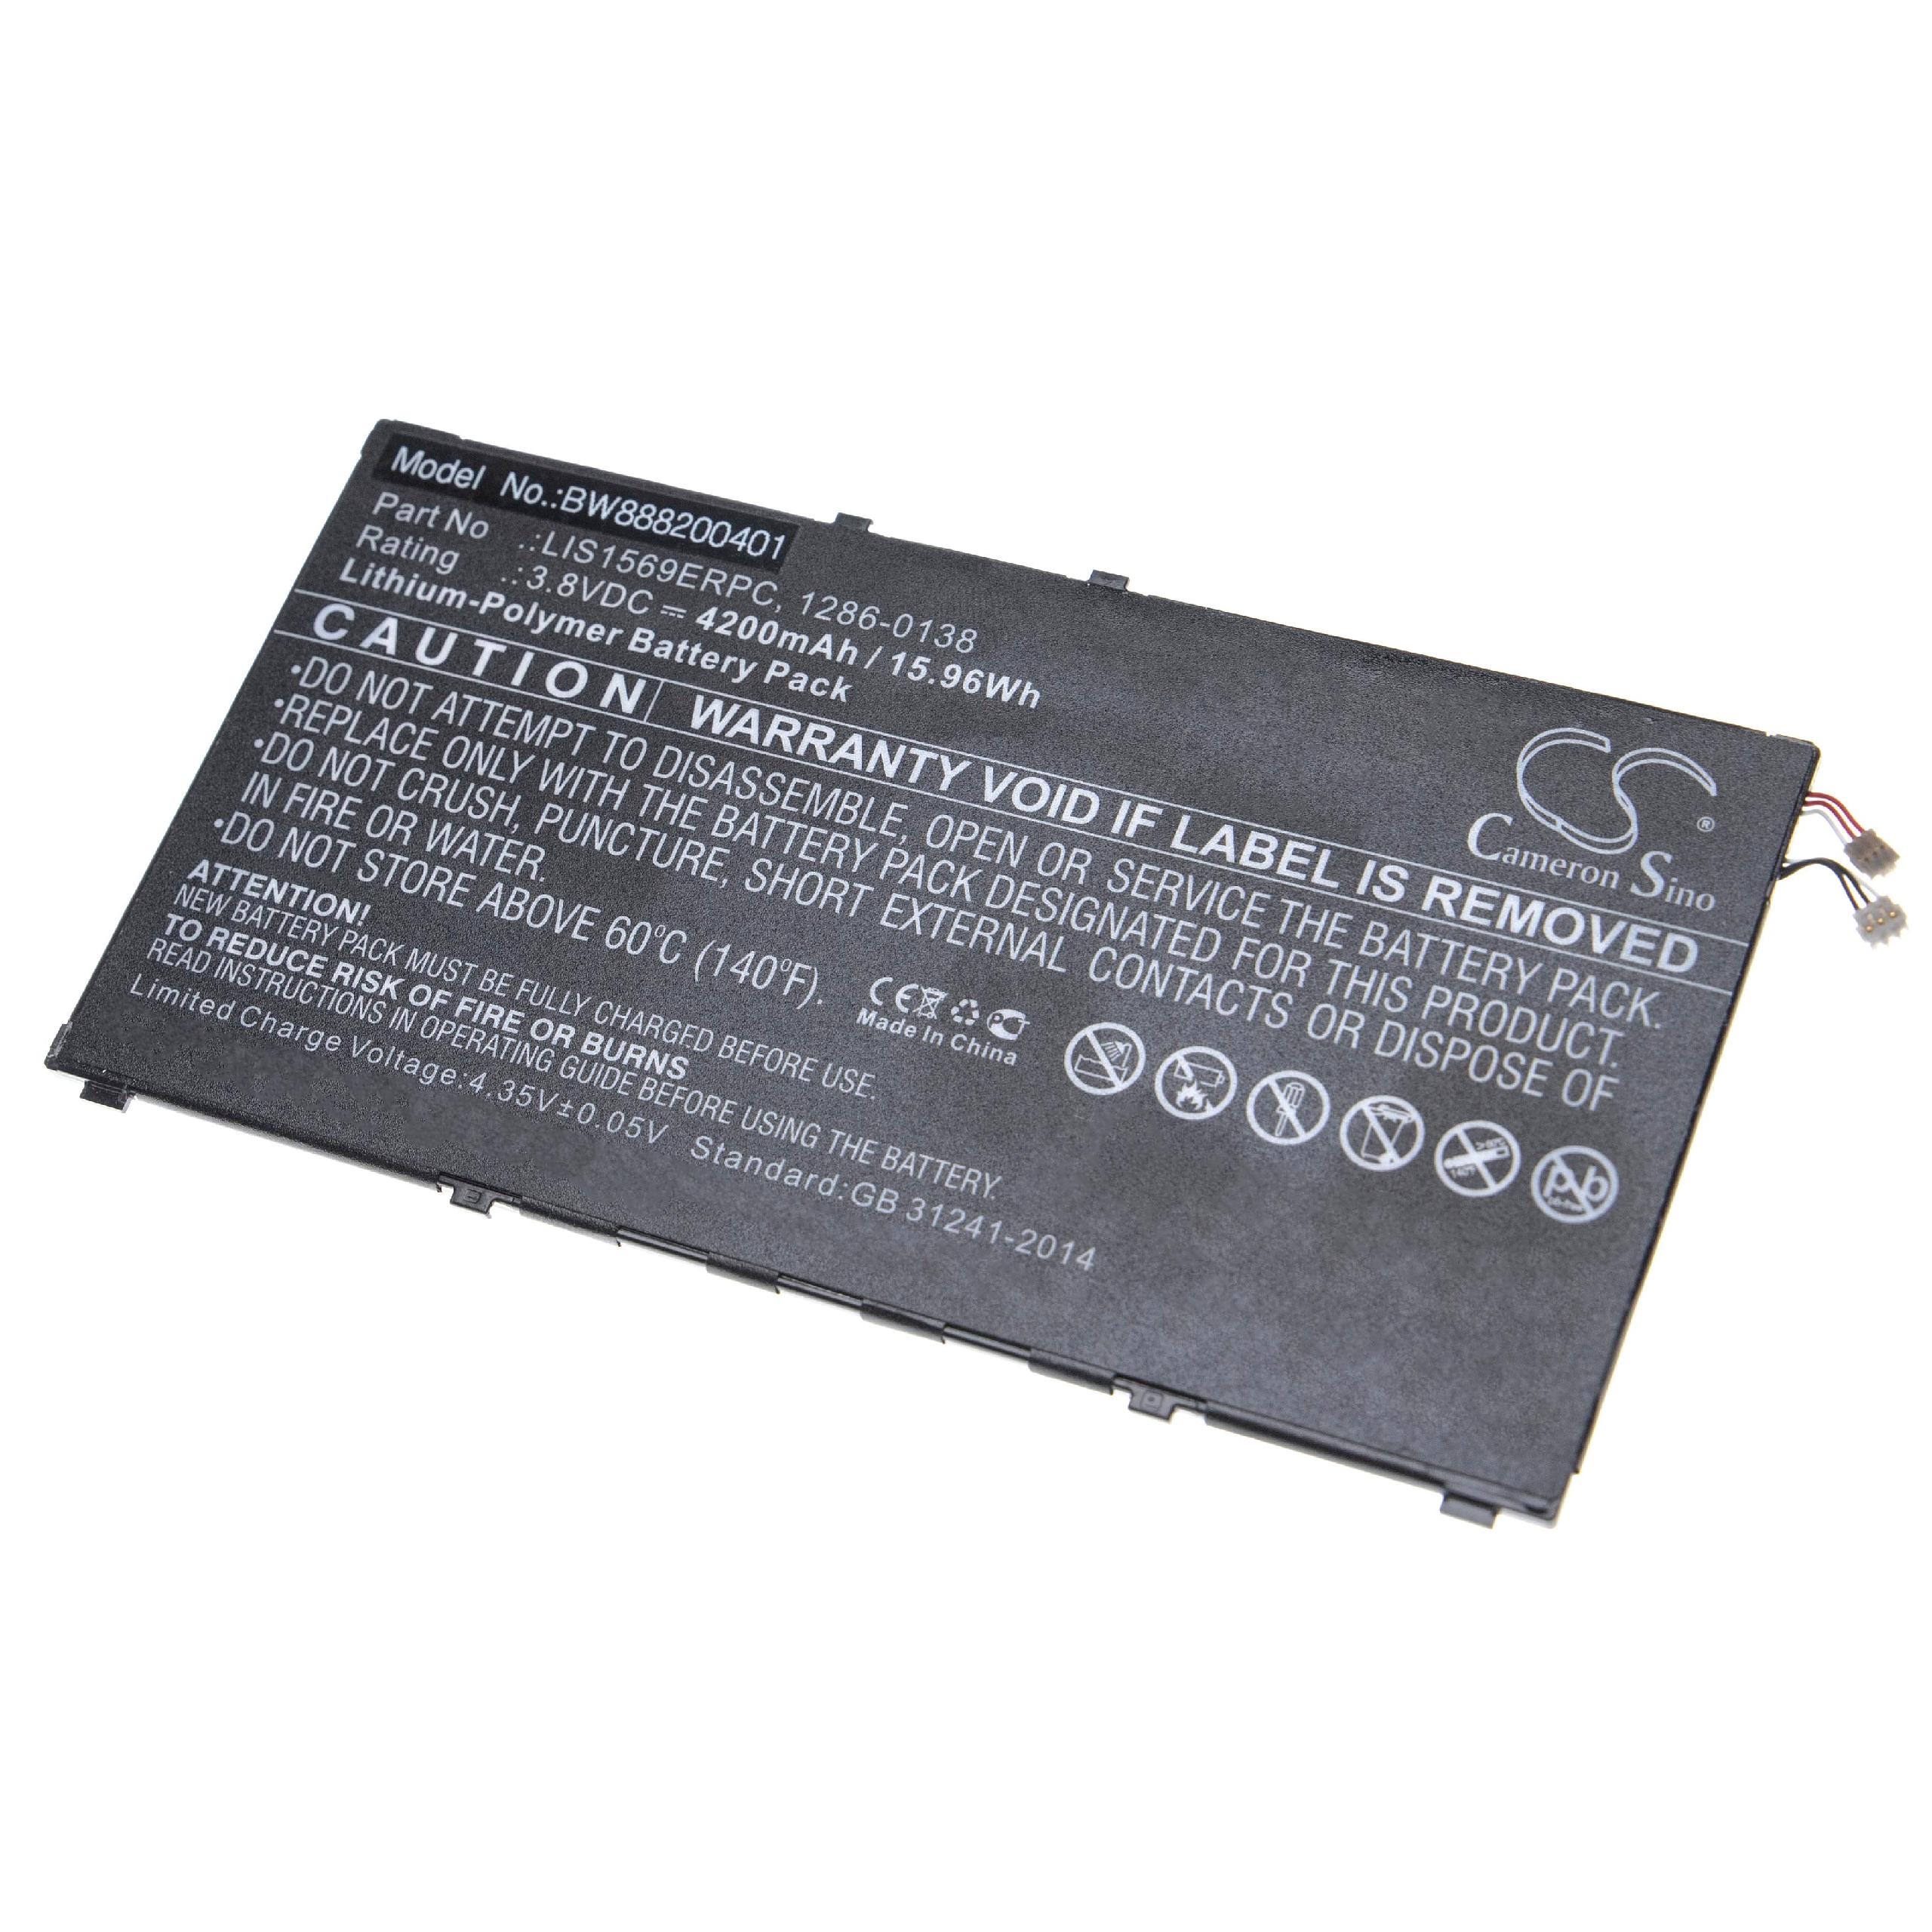 Mobile Phone Battery Replacement for Sony LIS1569ERPC, 1286-0138 - 4200mAh 3.8V Li-polymer